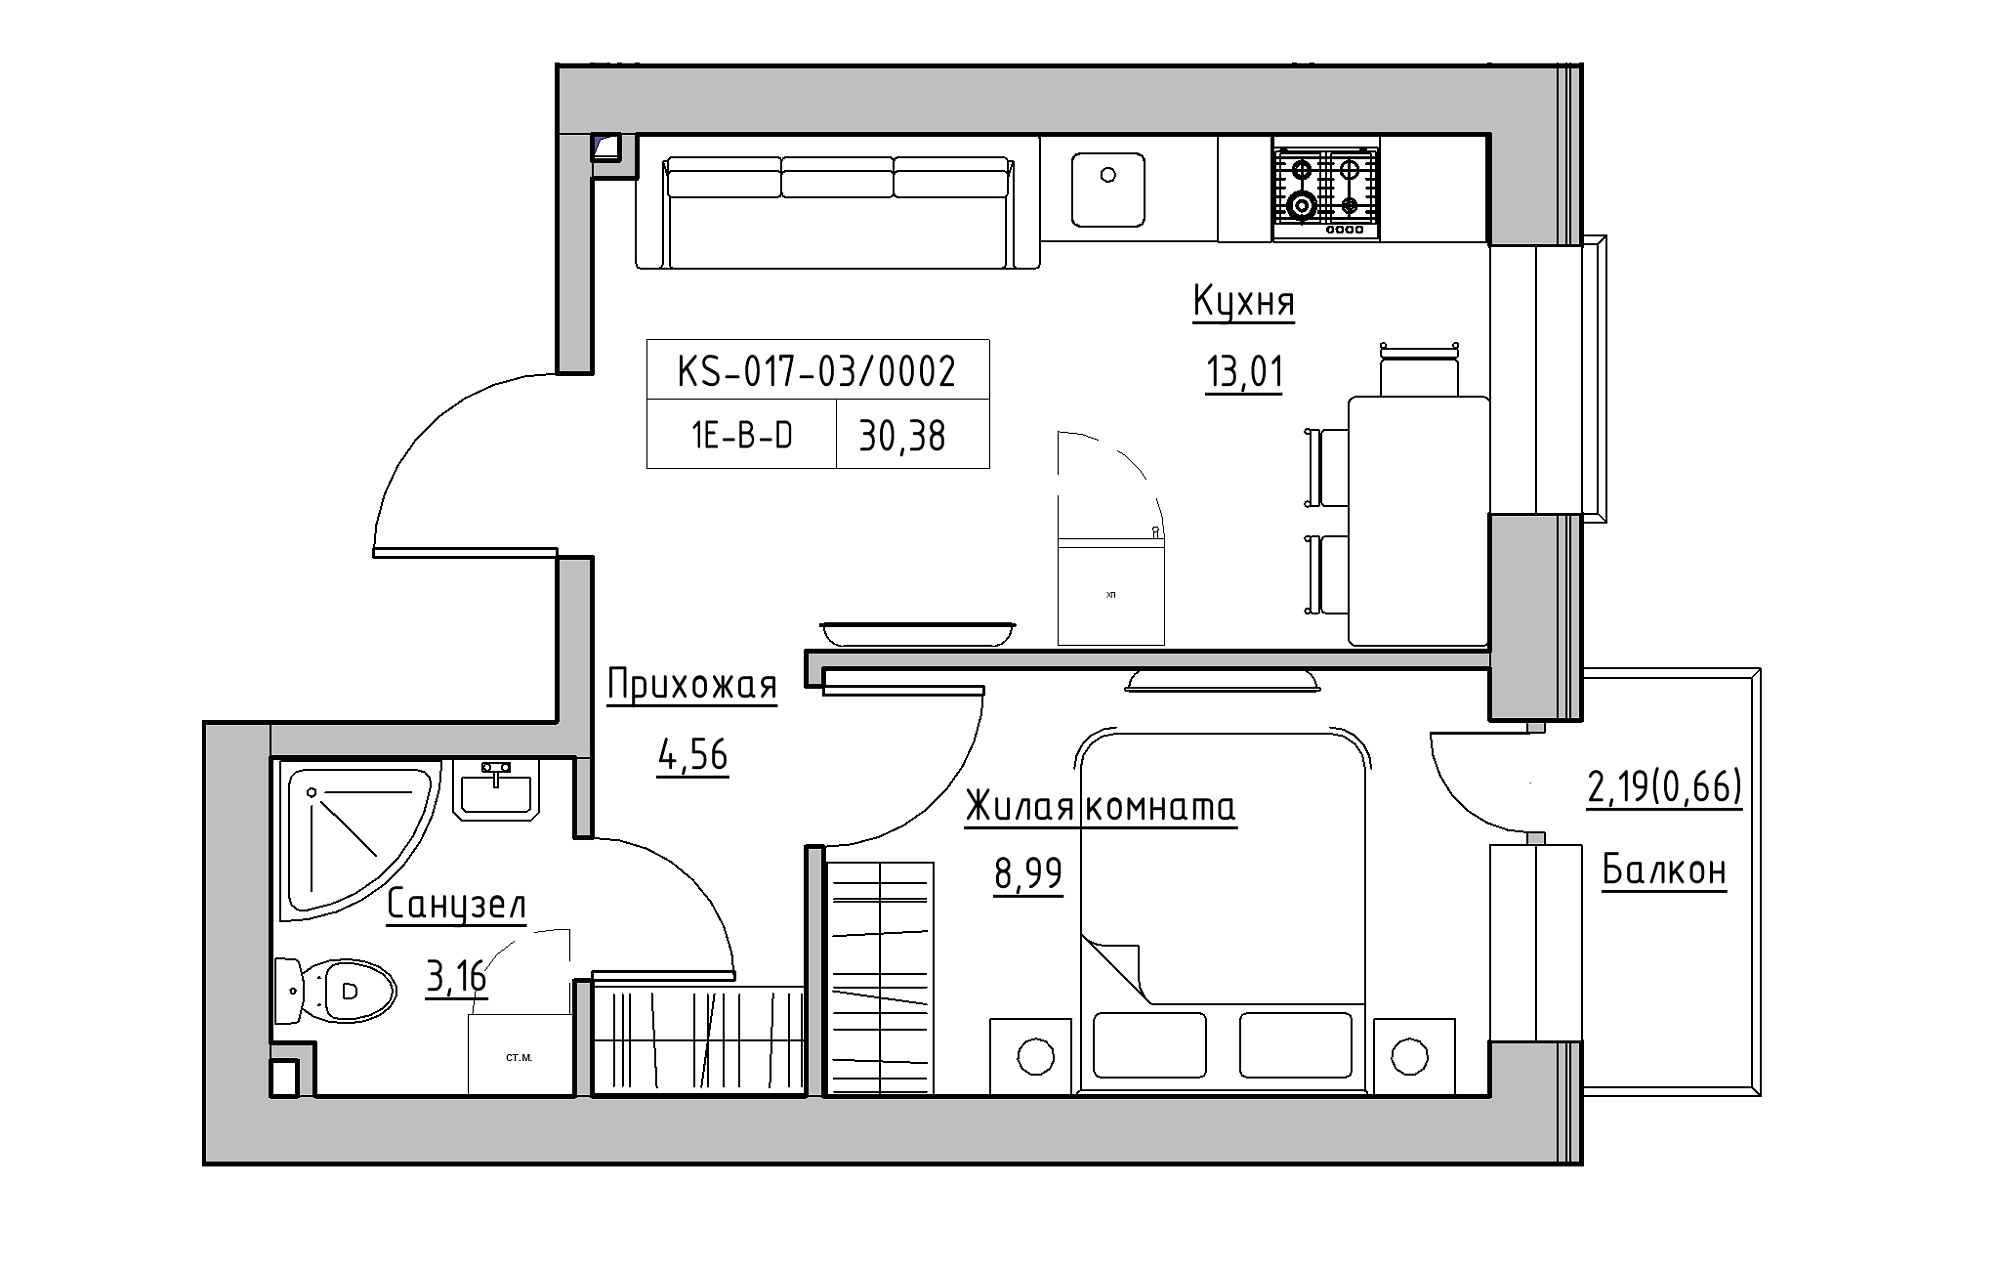 Planning 1-rm flats area 30.38m2, KS-017-03/0002.